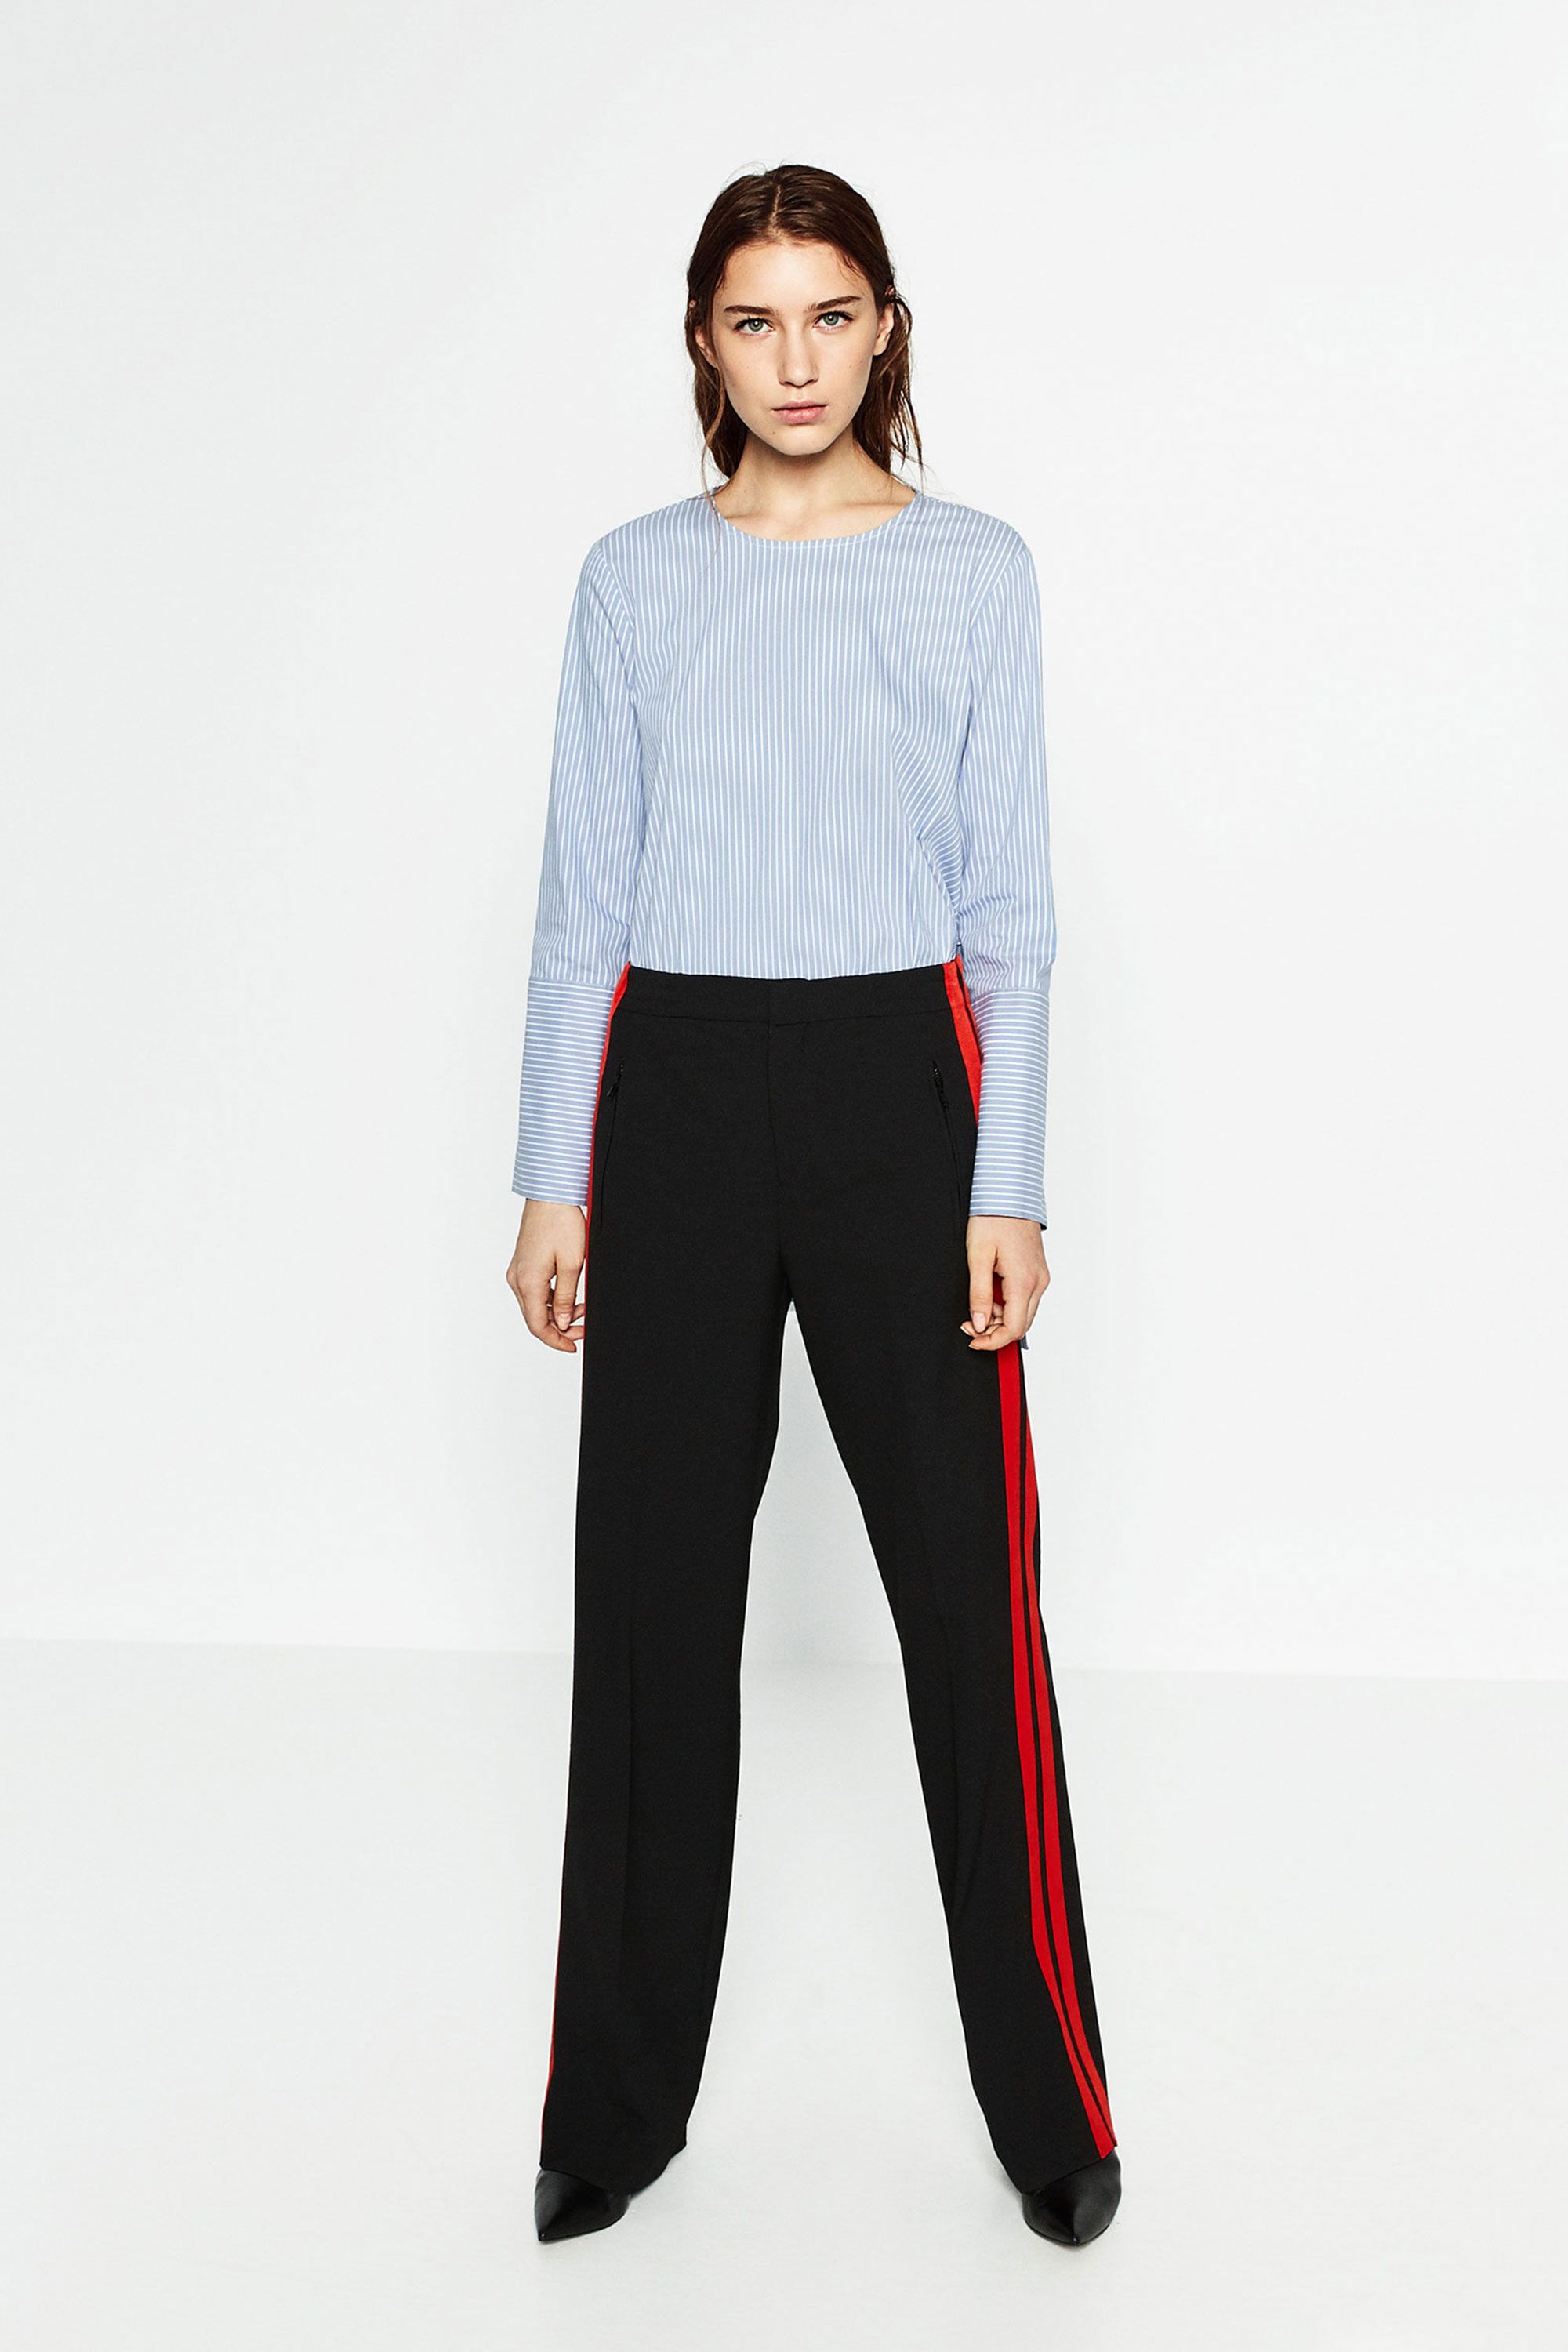 Zara | Pants & Jumpsuits | Zara Straight Leg Menswear Pants Burgundy Red  Trousers | Poshmark